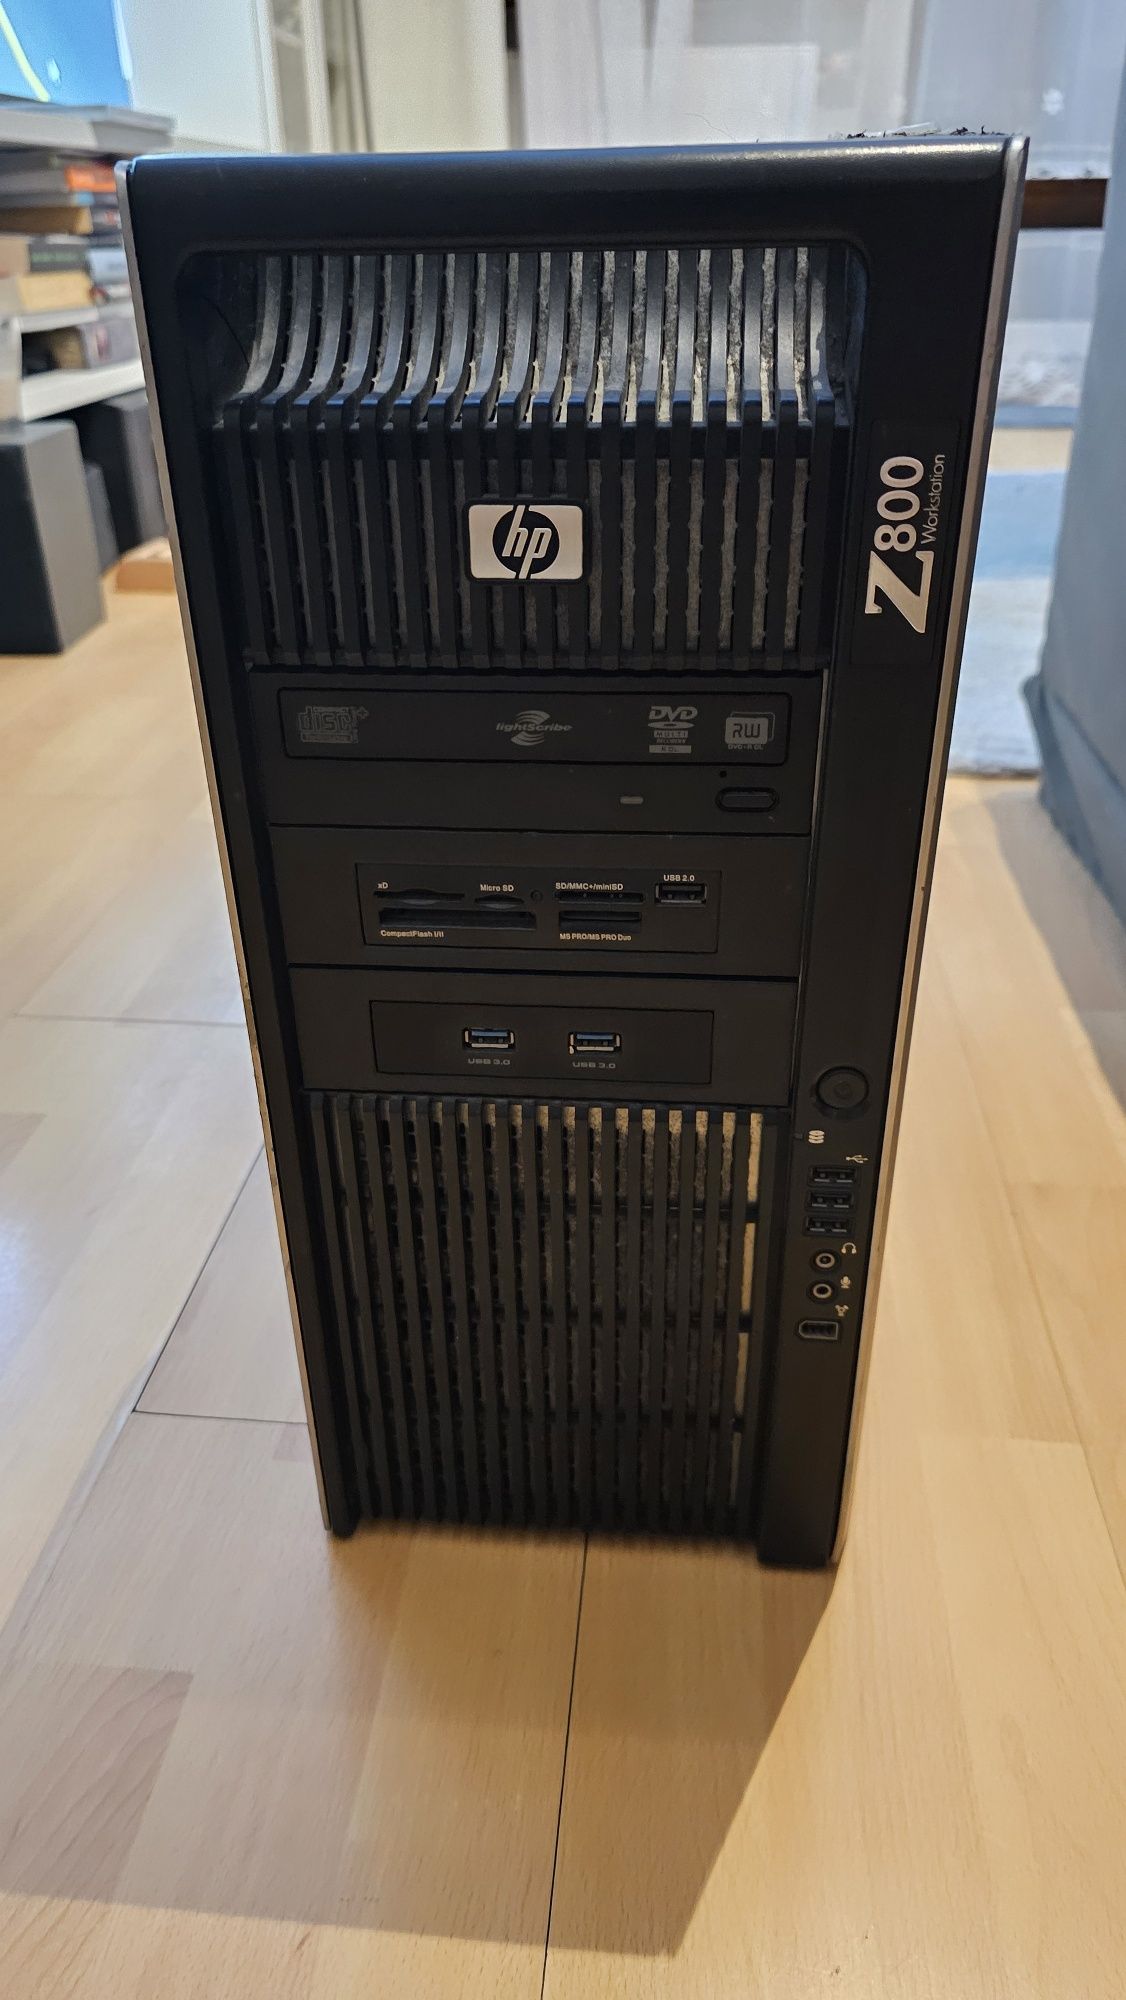 WorkStation HP Z800 - stacja pod vmix (1)